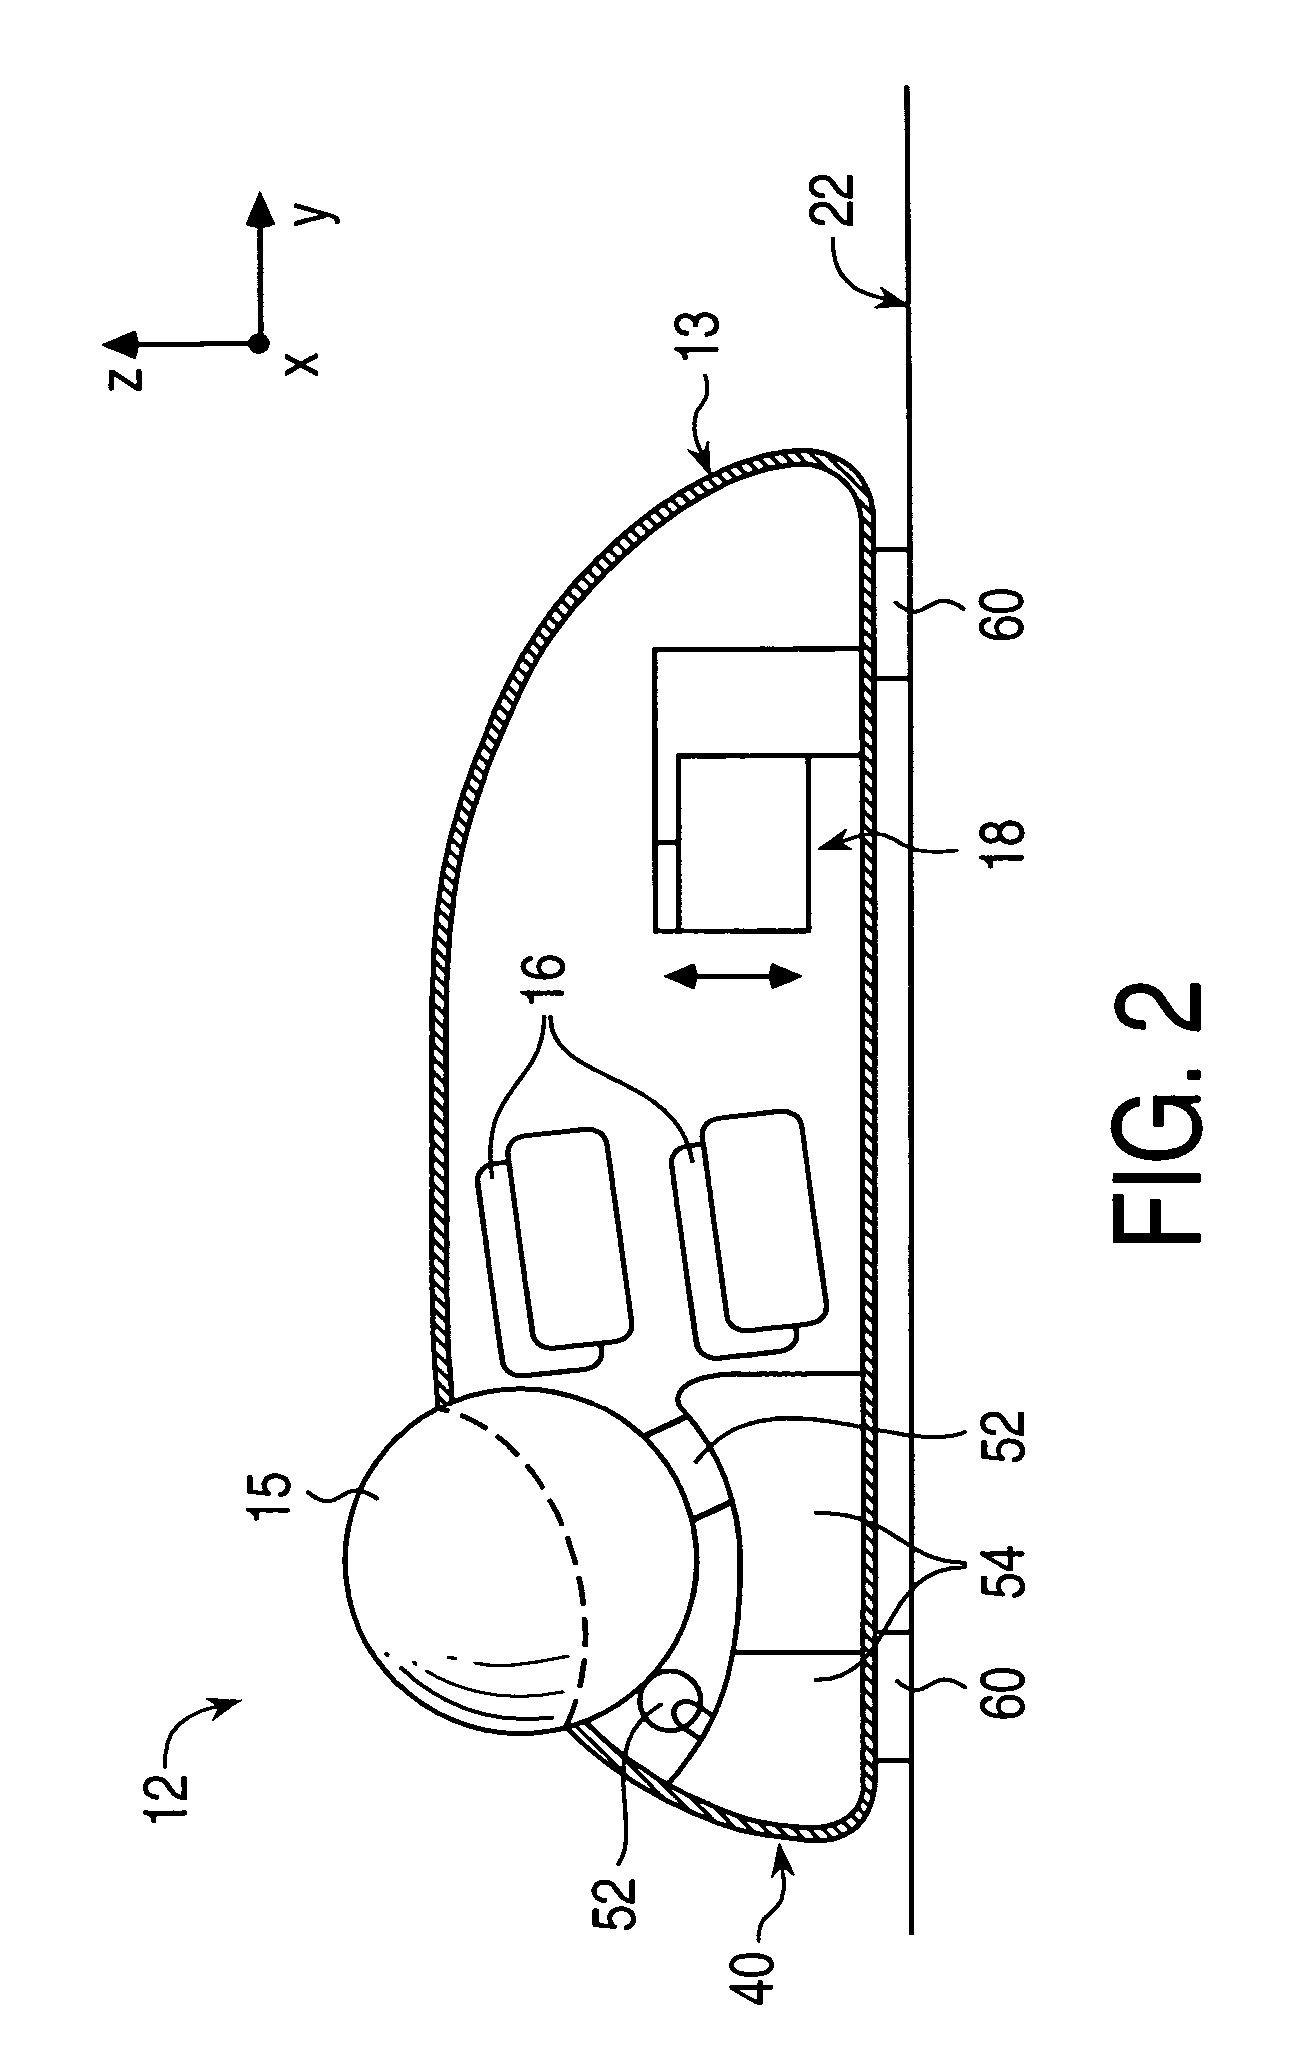 Haptic trackball device